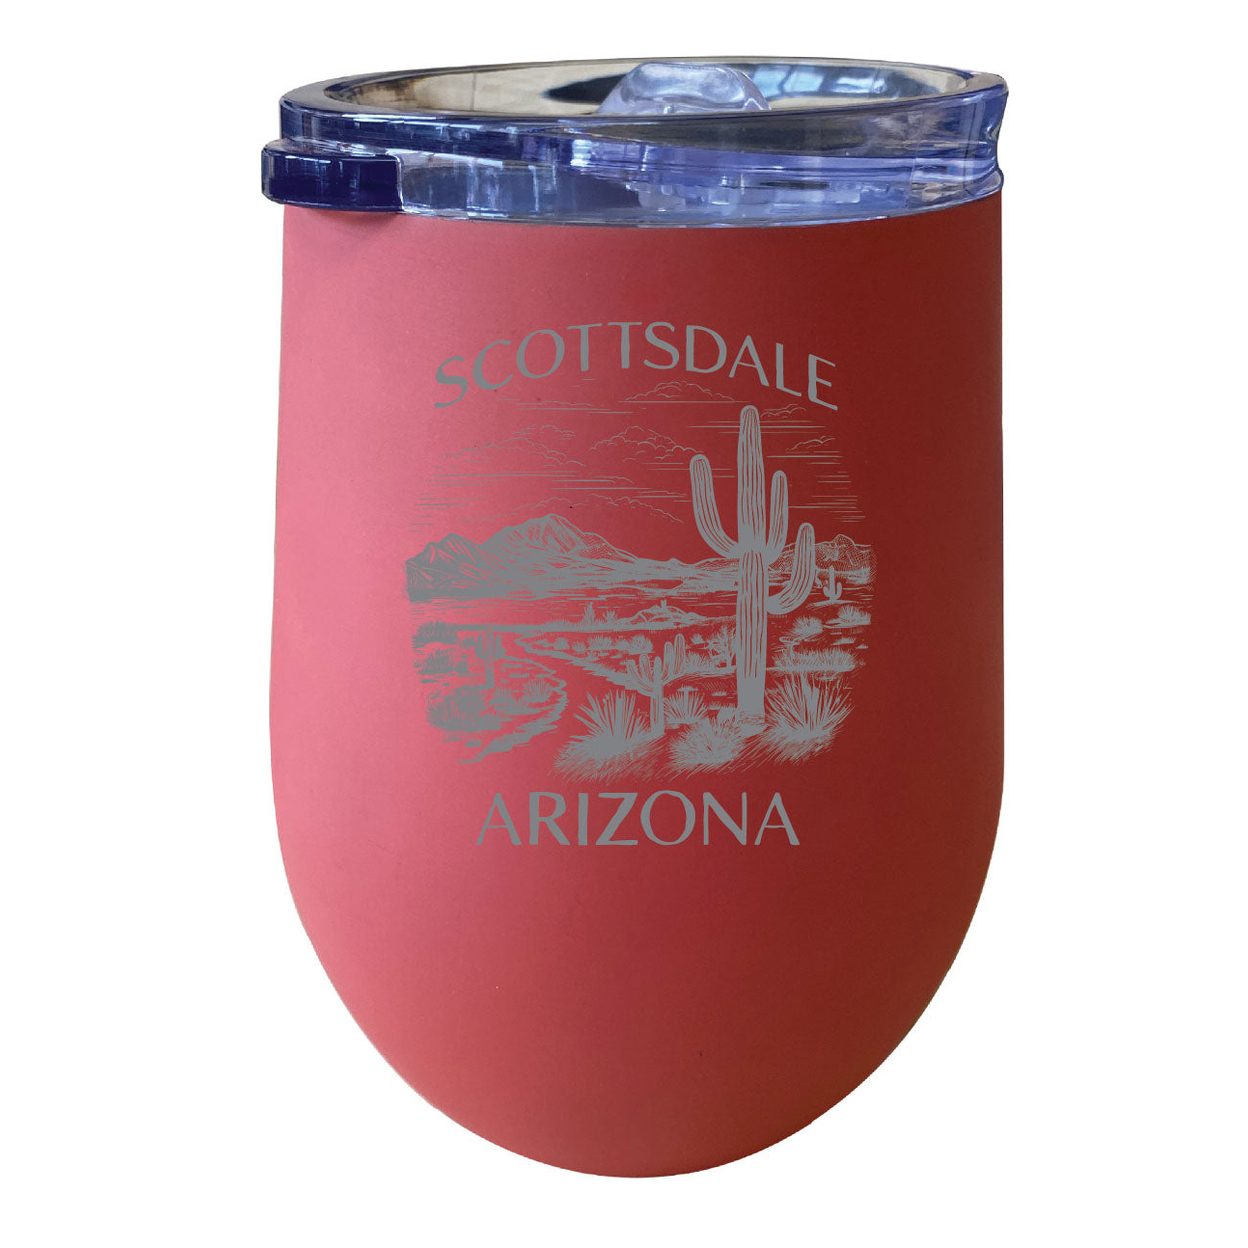 Scottsdale Arizona Souvenir 12 Oz Engraved Insulated Wine Stainless Steel Tumbler - Coral,,Single Unit